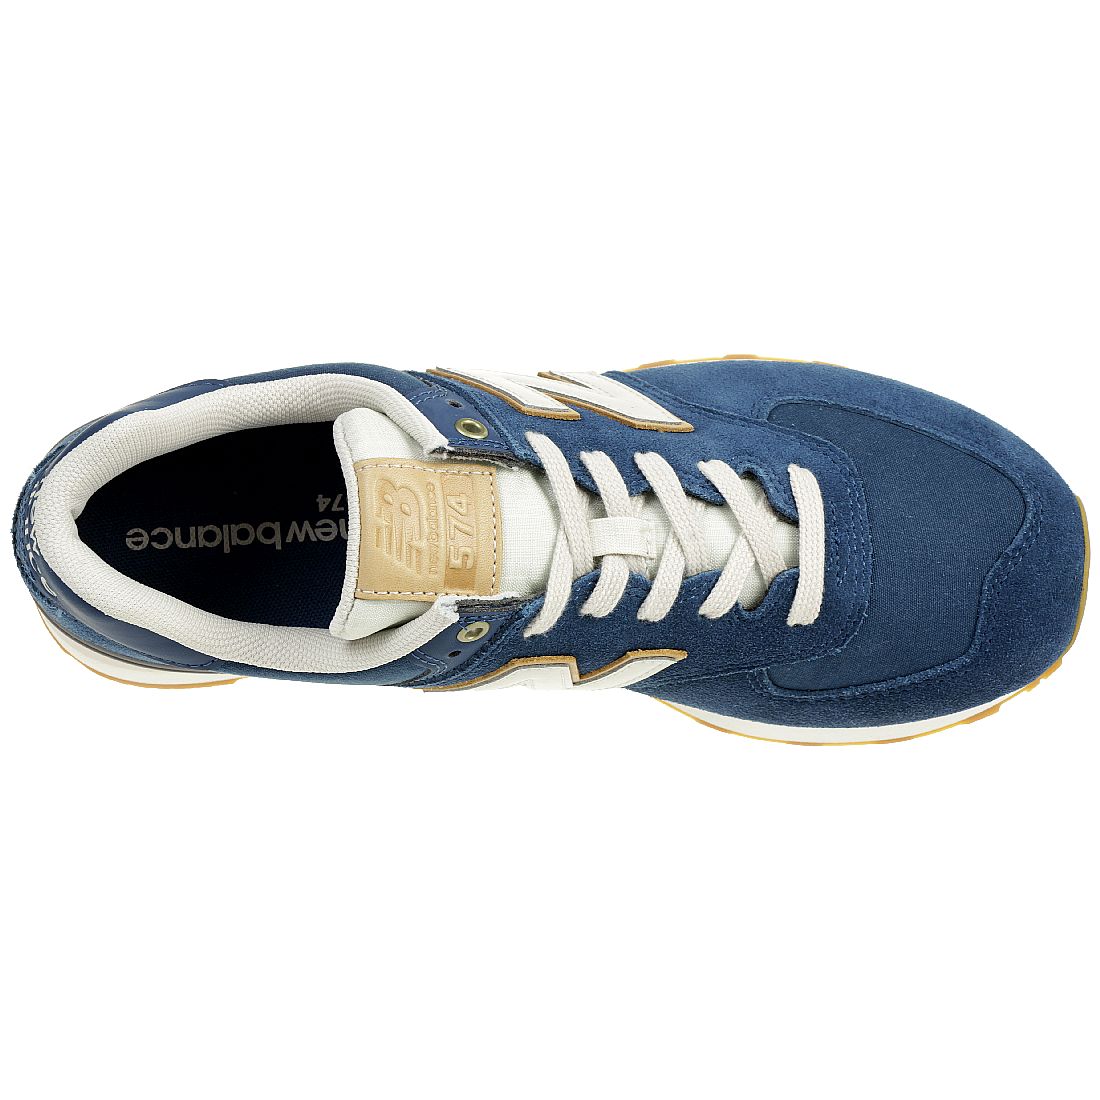 New Balance ML 574 OUB Classic Sneaker Herren Schuhe blau